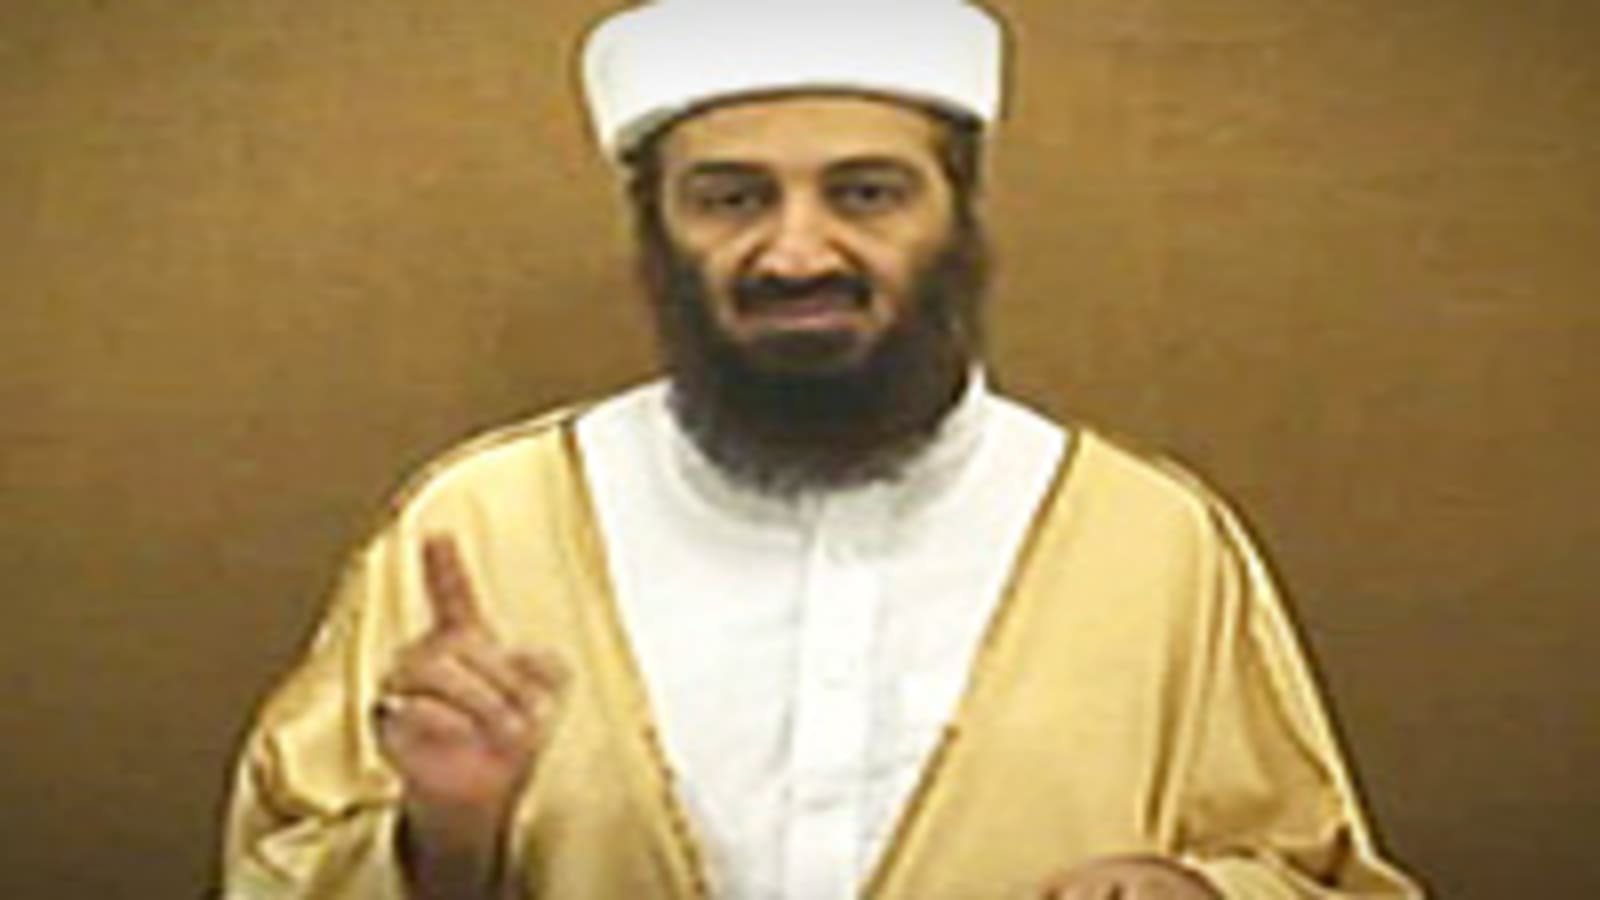 When Will Bin Laden's Photo Be Released?